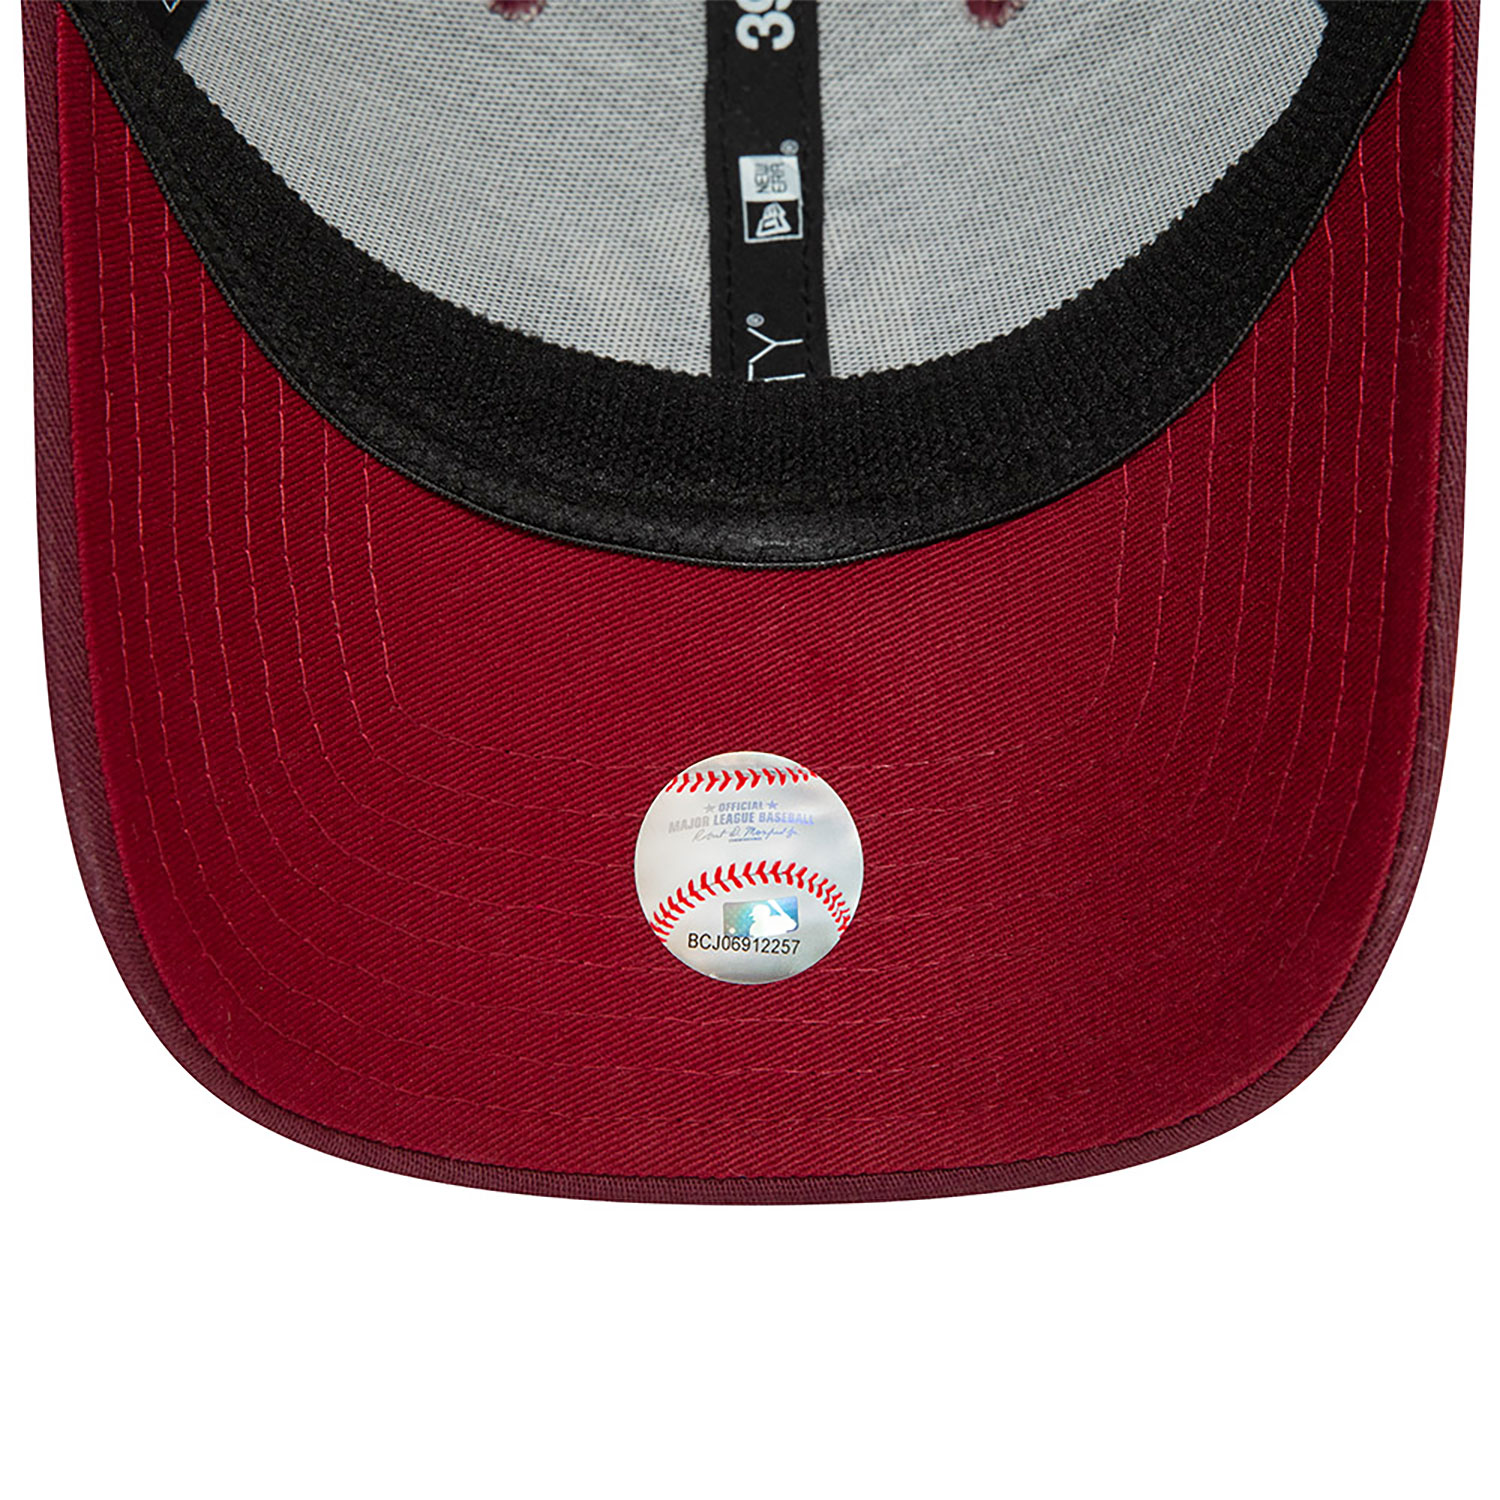 New York Yankees Team Logo Boucle Dark Red 39THIRTY Stretch Fit Cap